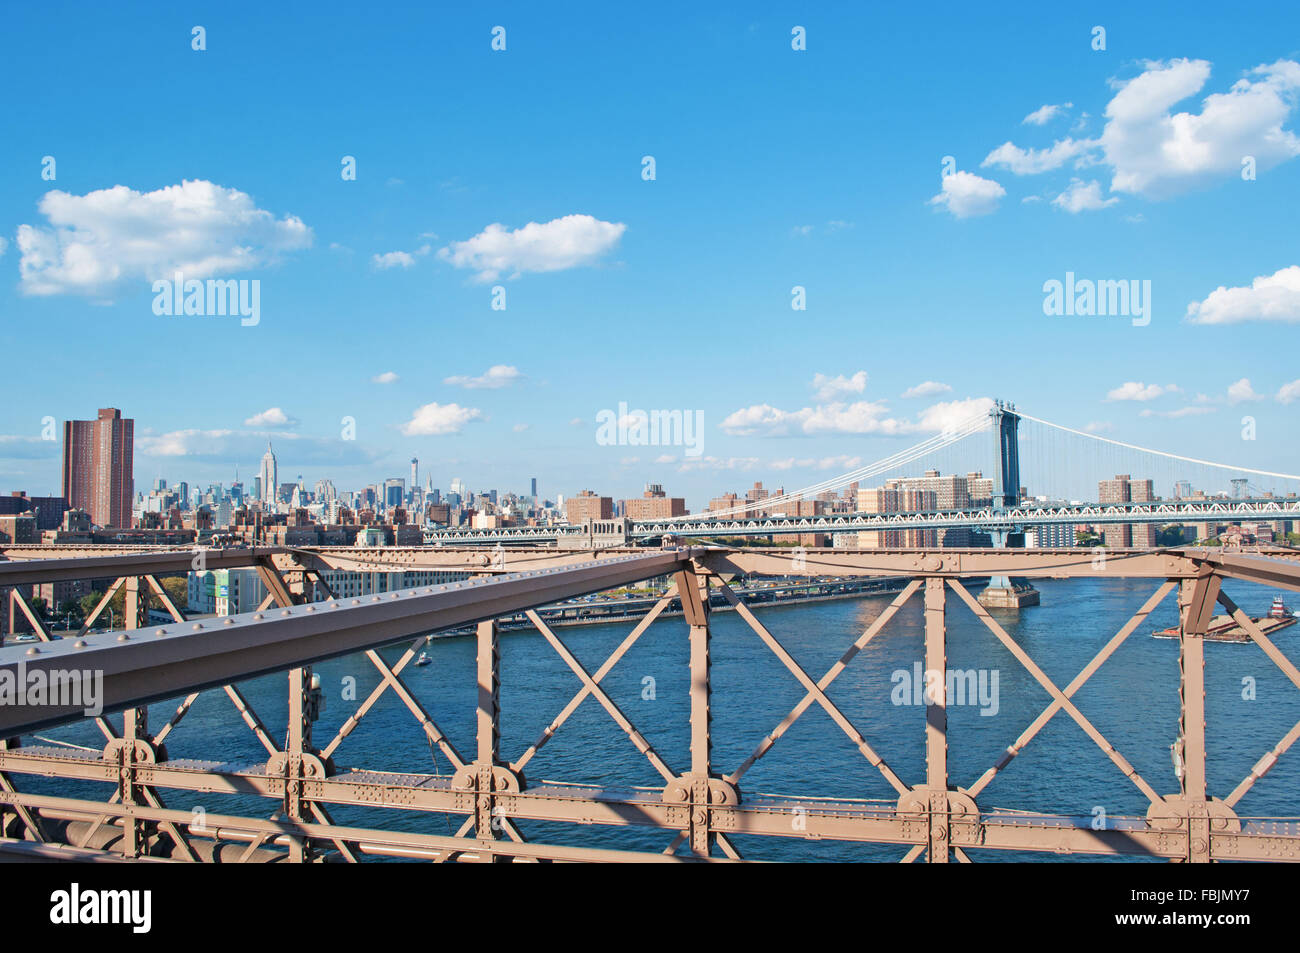 New York, United States of America: skyline, skyscrapers and Manhattan Bridge seen from Brooklyn Bridge Stock Photo